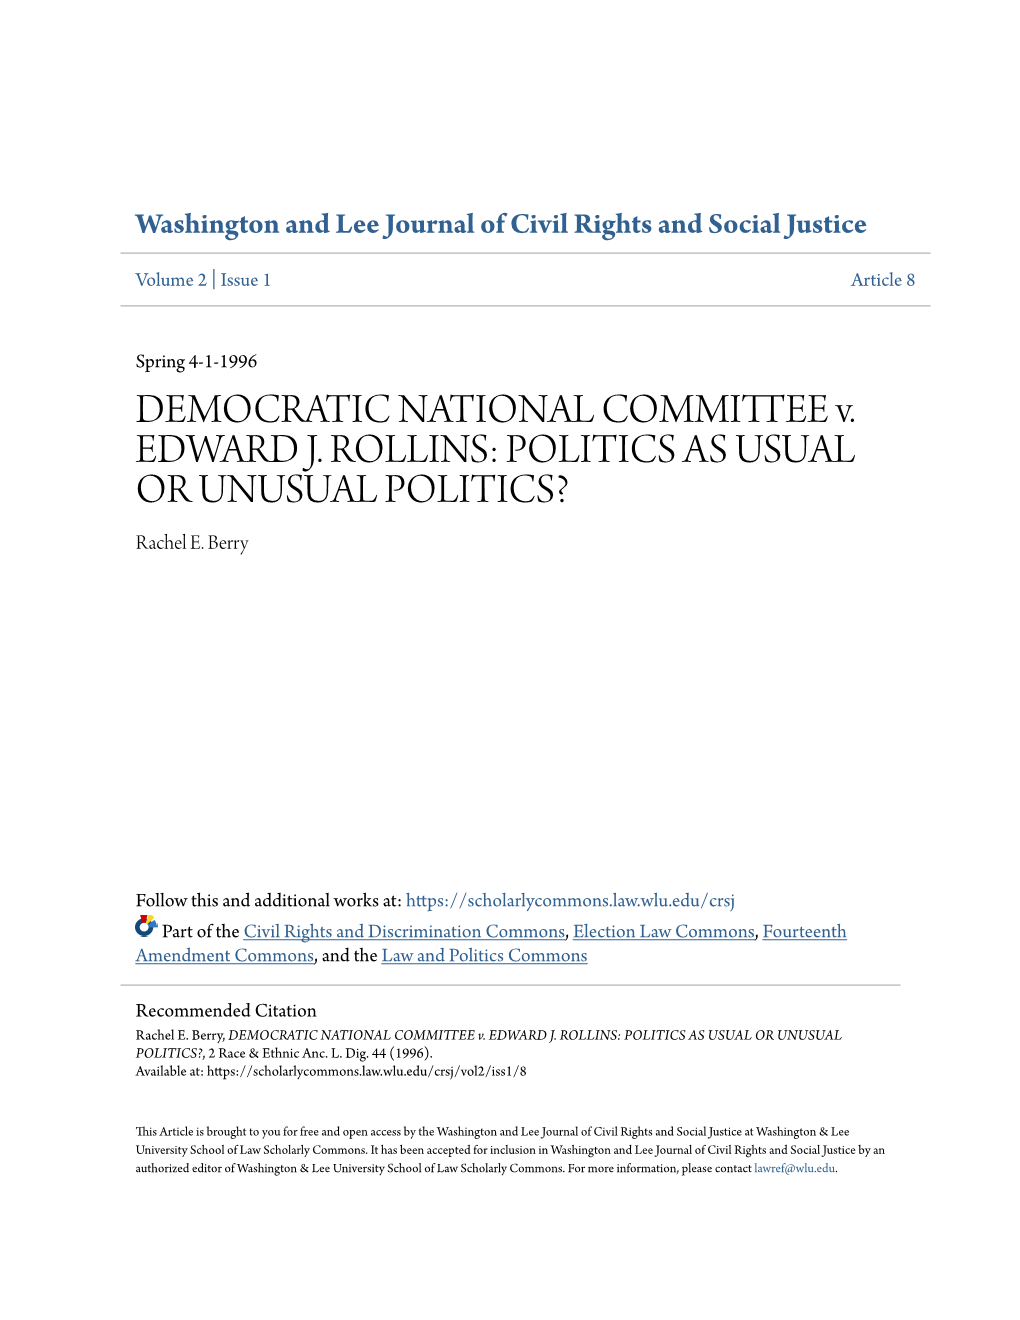 DEMOCRATIC NATIONAL COMMITTEE V. EDWARD J. ROLLINS: POLITICS AS USUAL OR UNUSUAL POLITICS?, 2 Race & Ethnic Anc